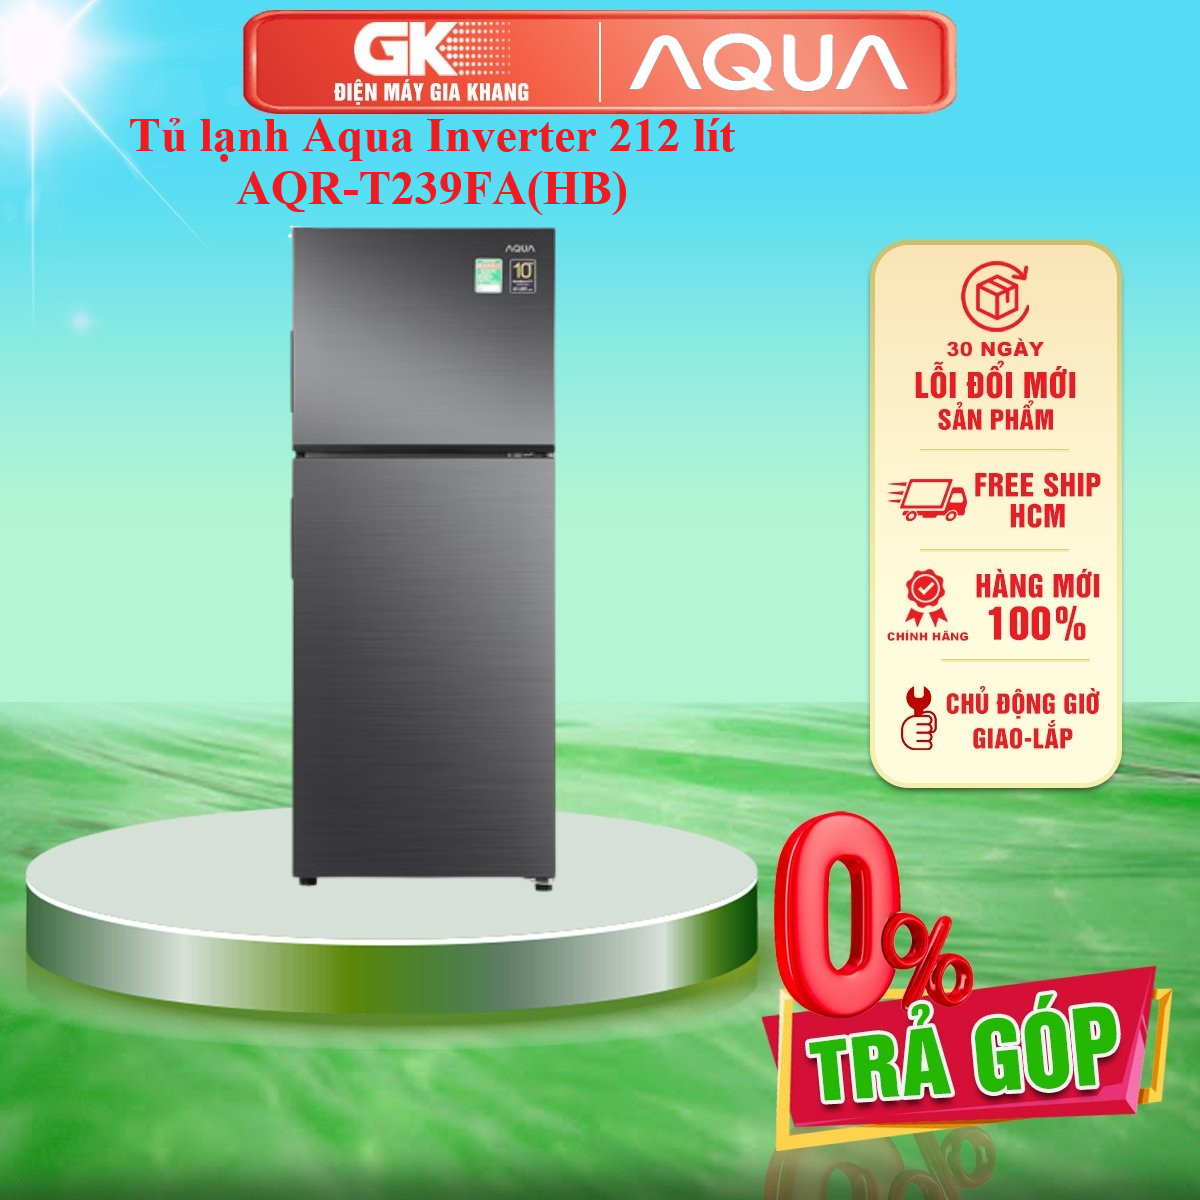 Tủ lạnh Aqua Inverter 212 lít AQR-T239FA HB Mẫu 2021